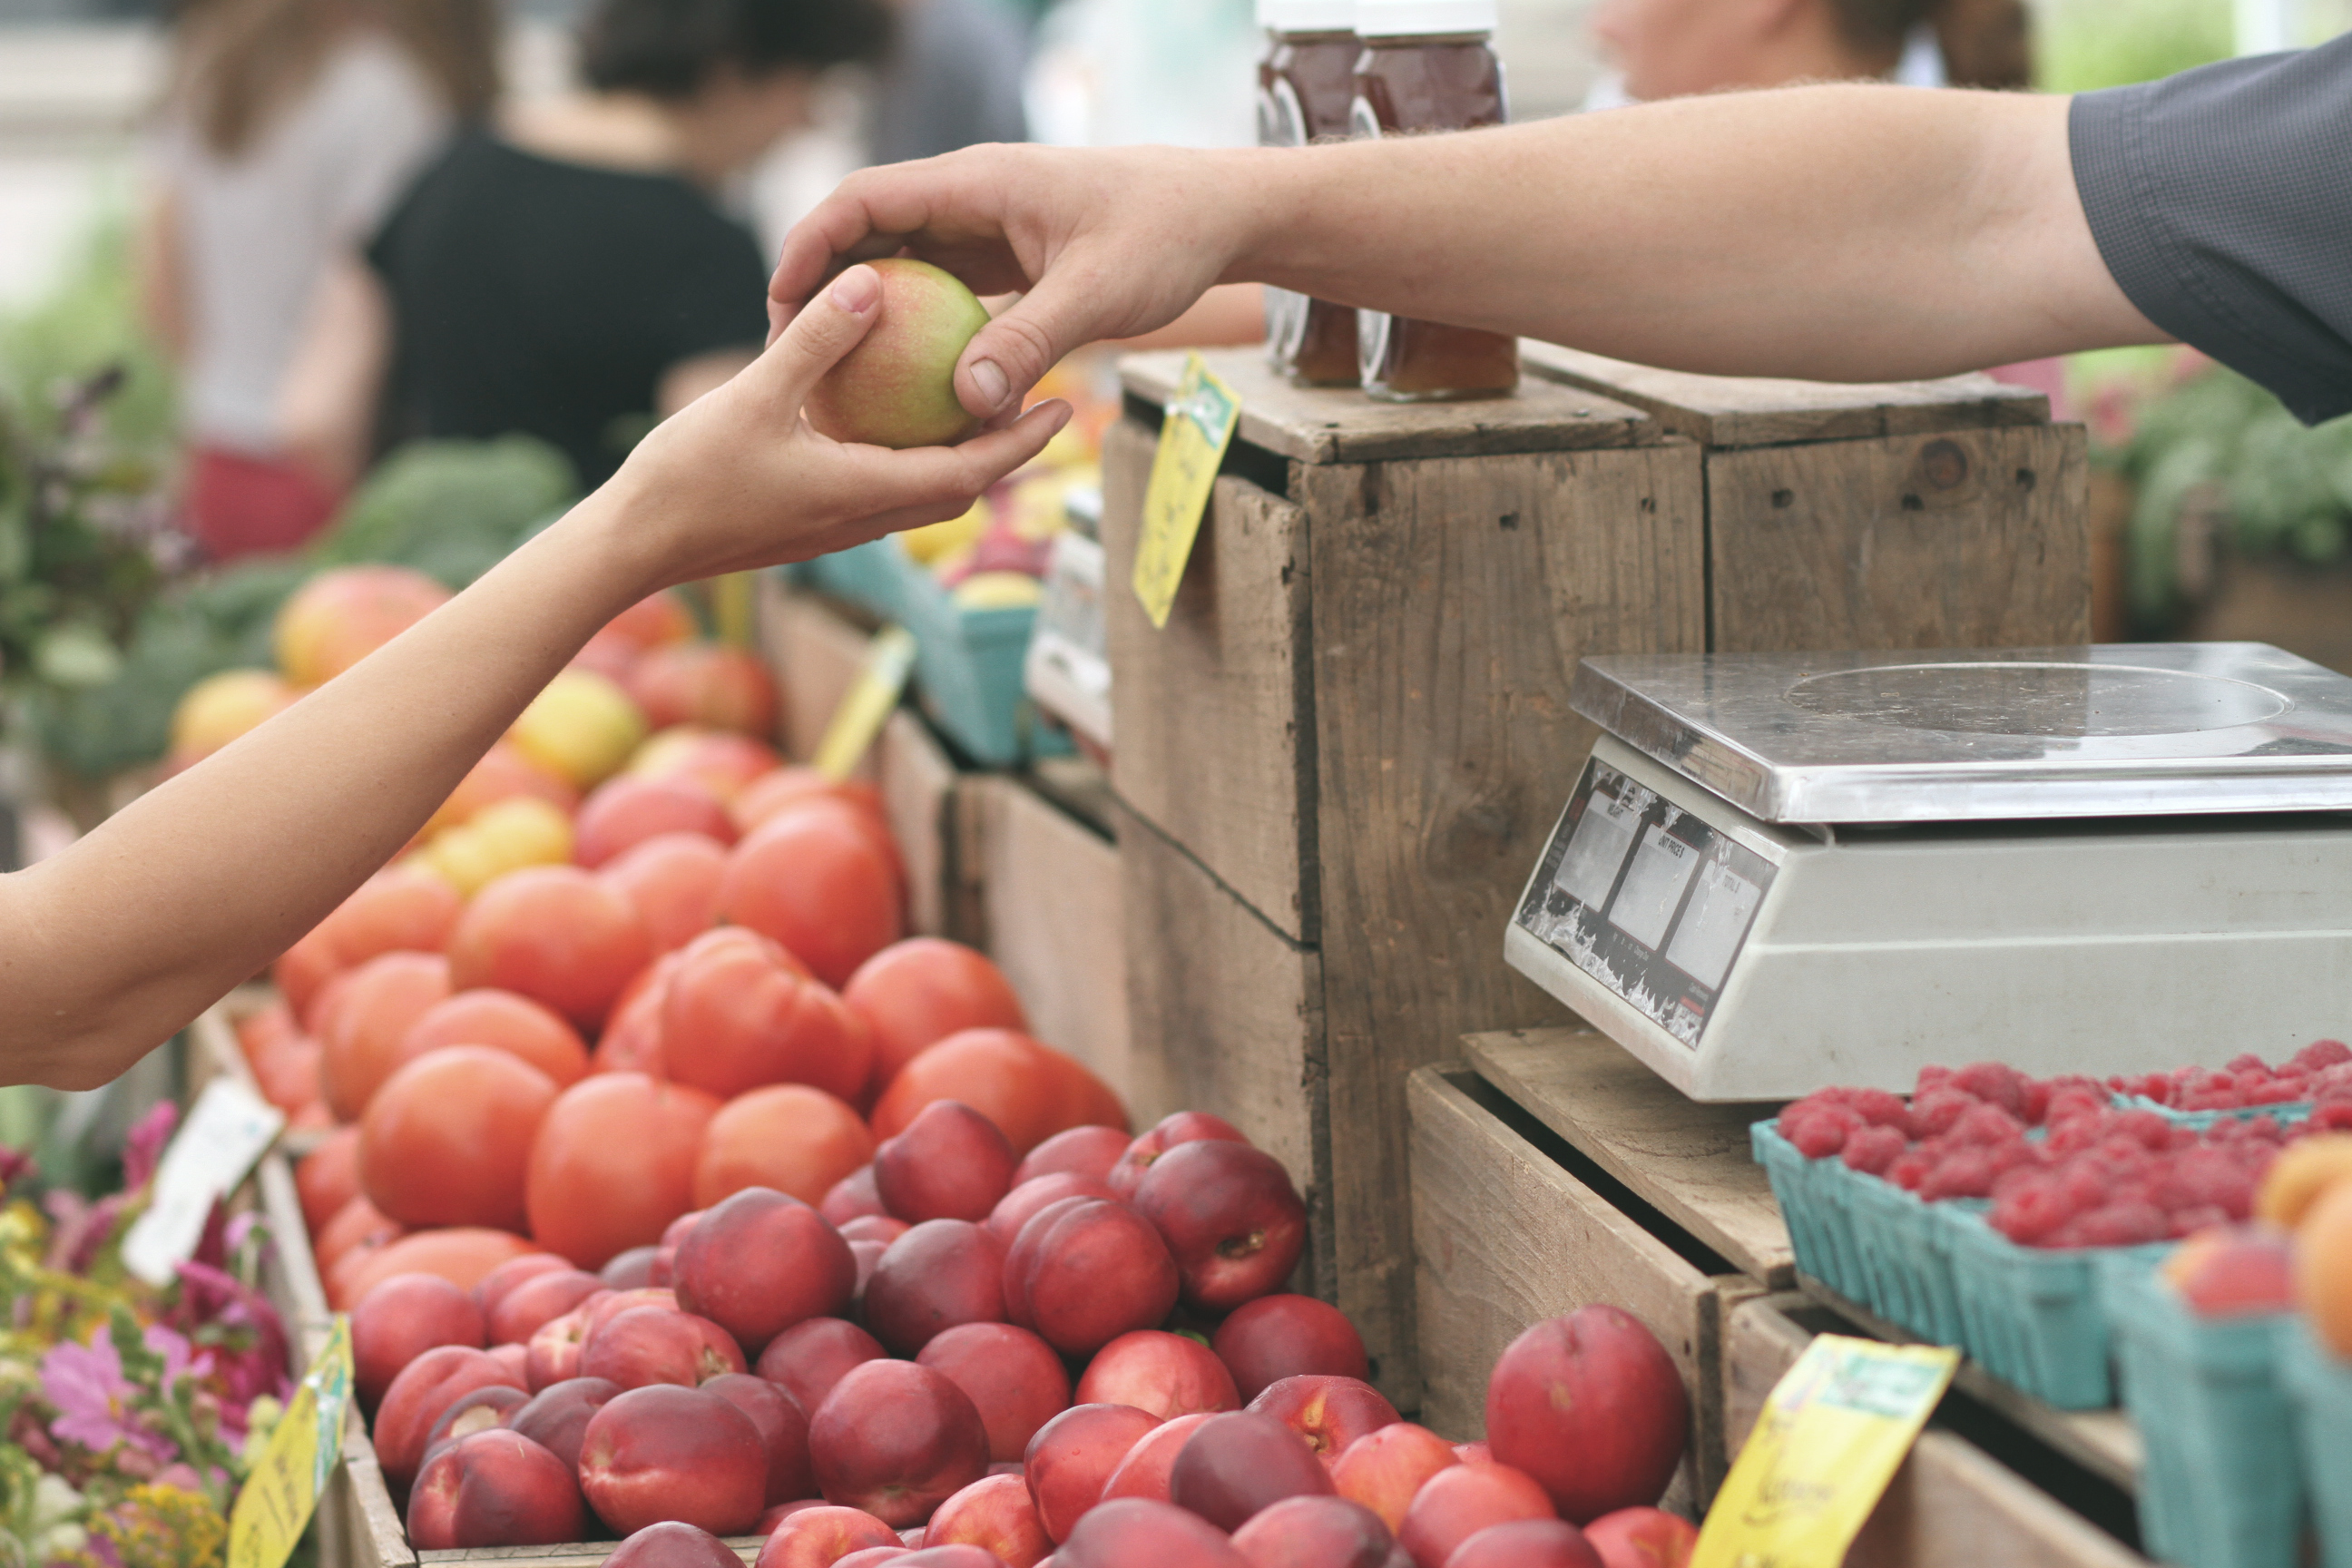 Customer purchasing produce.